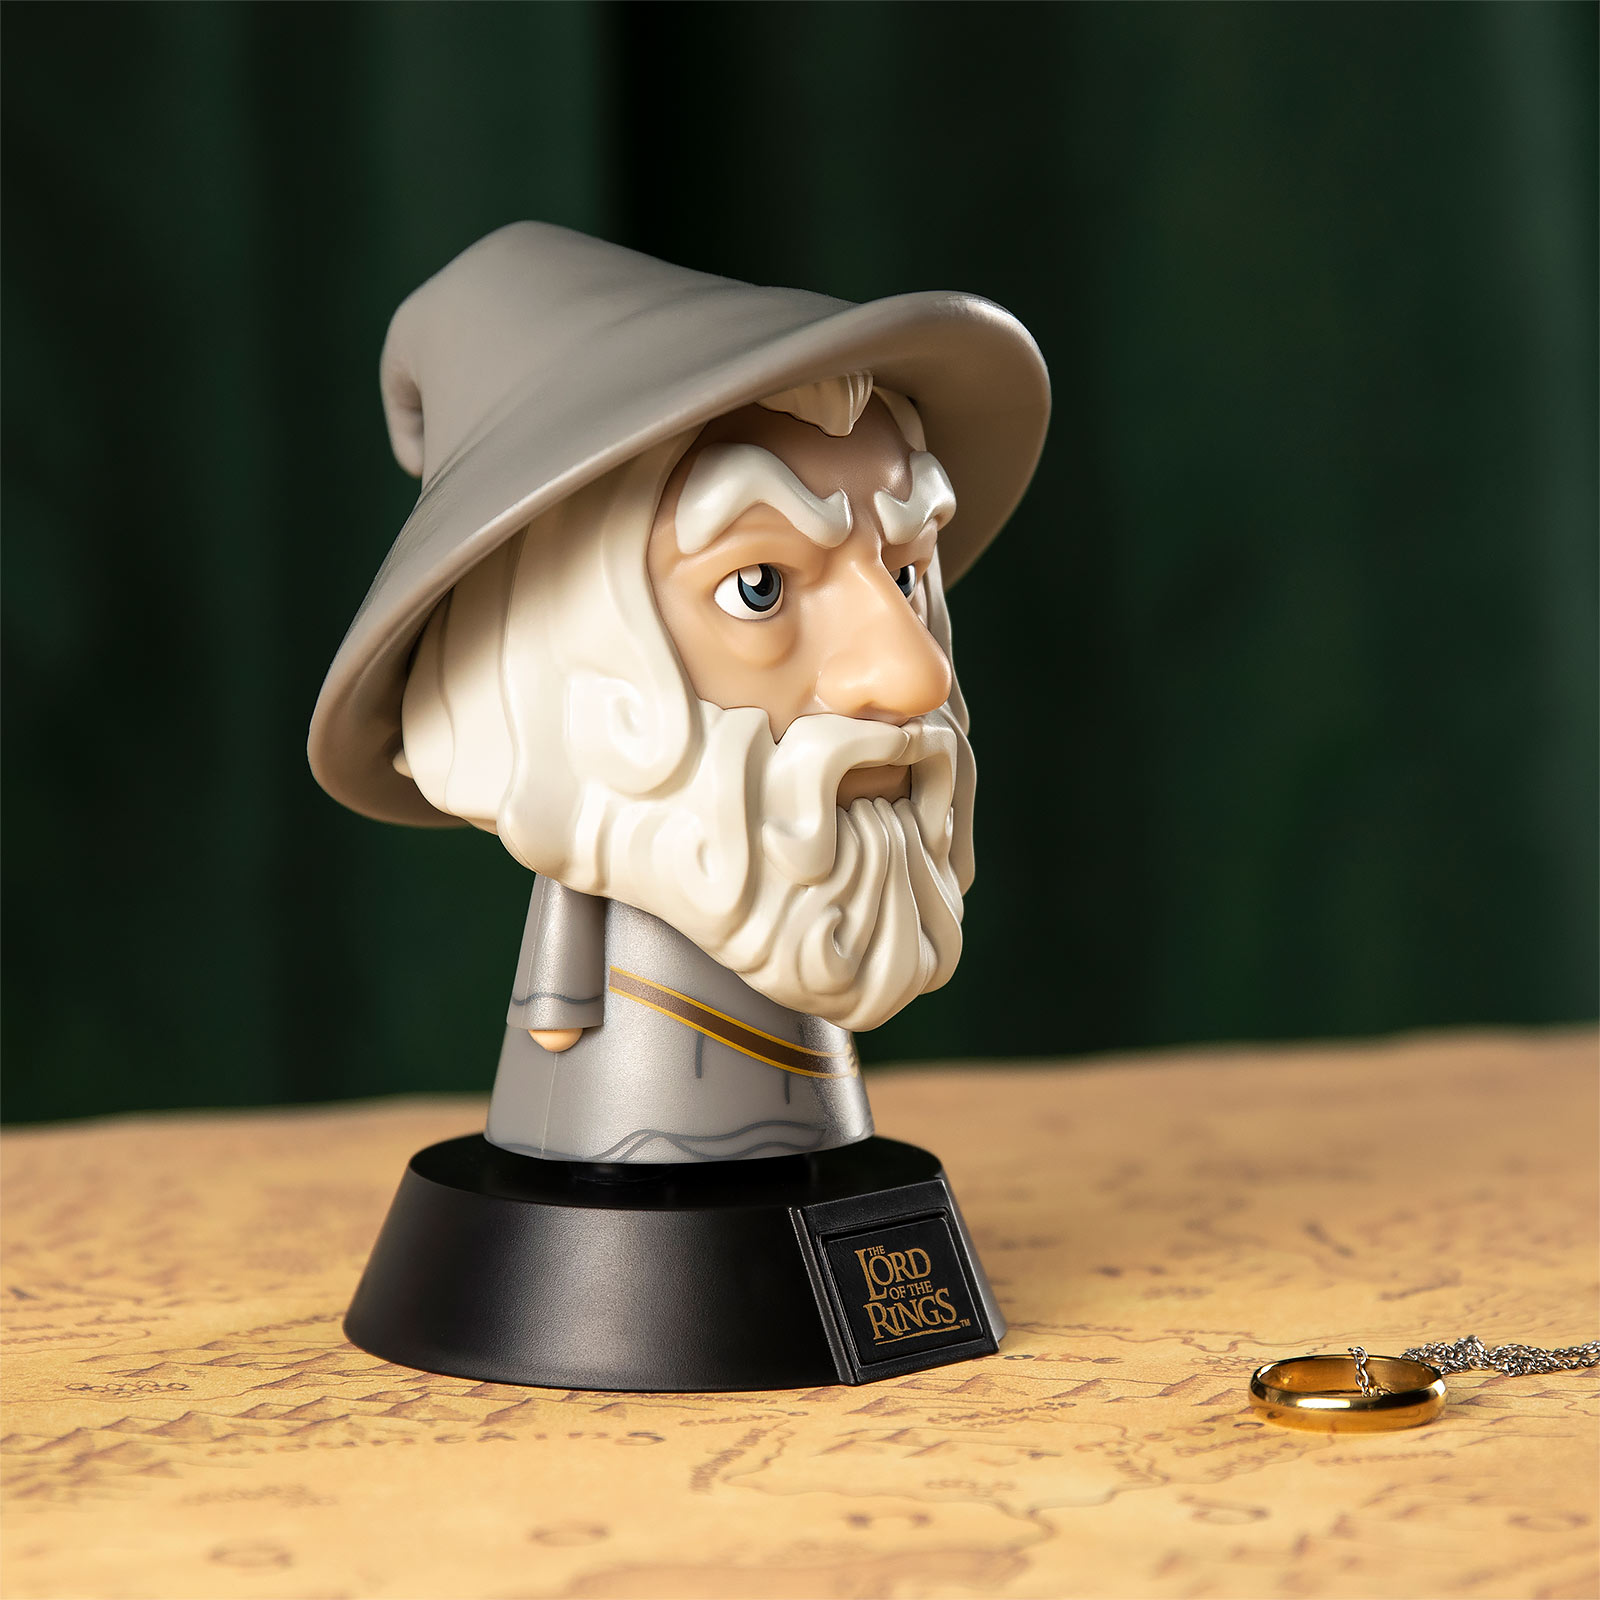 Herr der Ringe - Gandalf Icons 3D Tischlampe